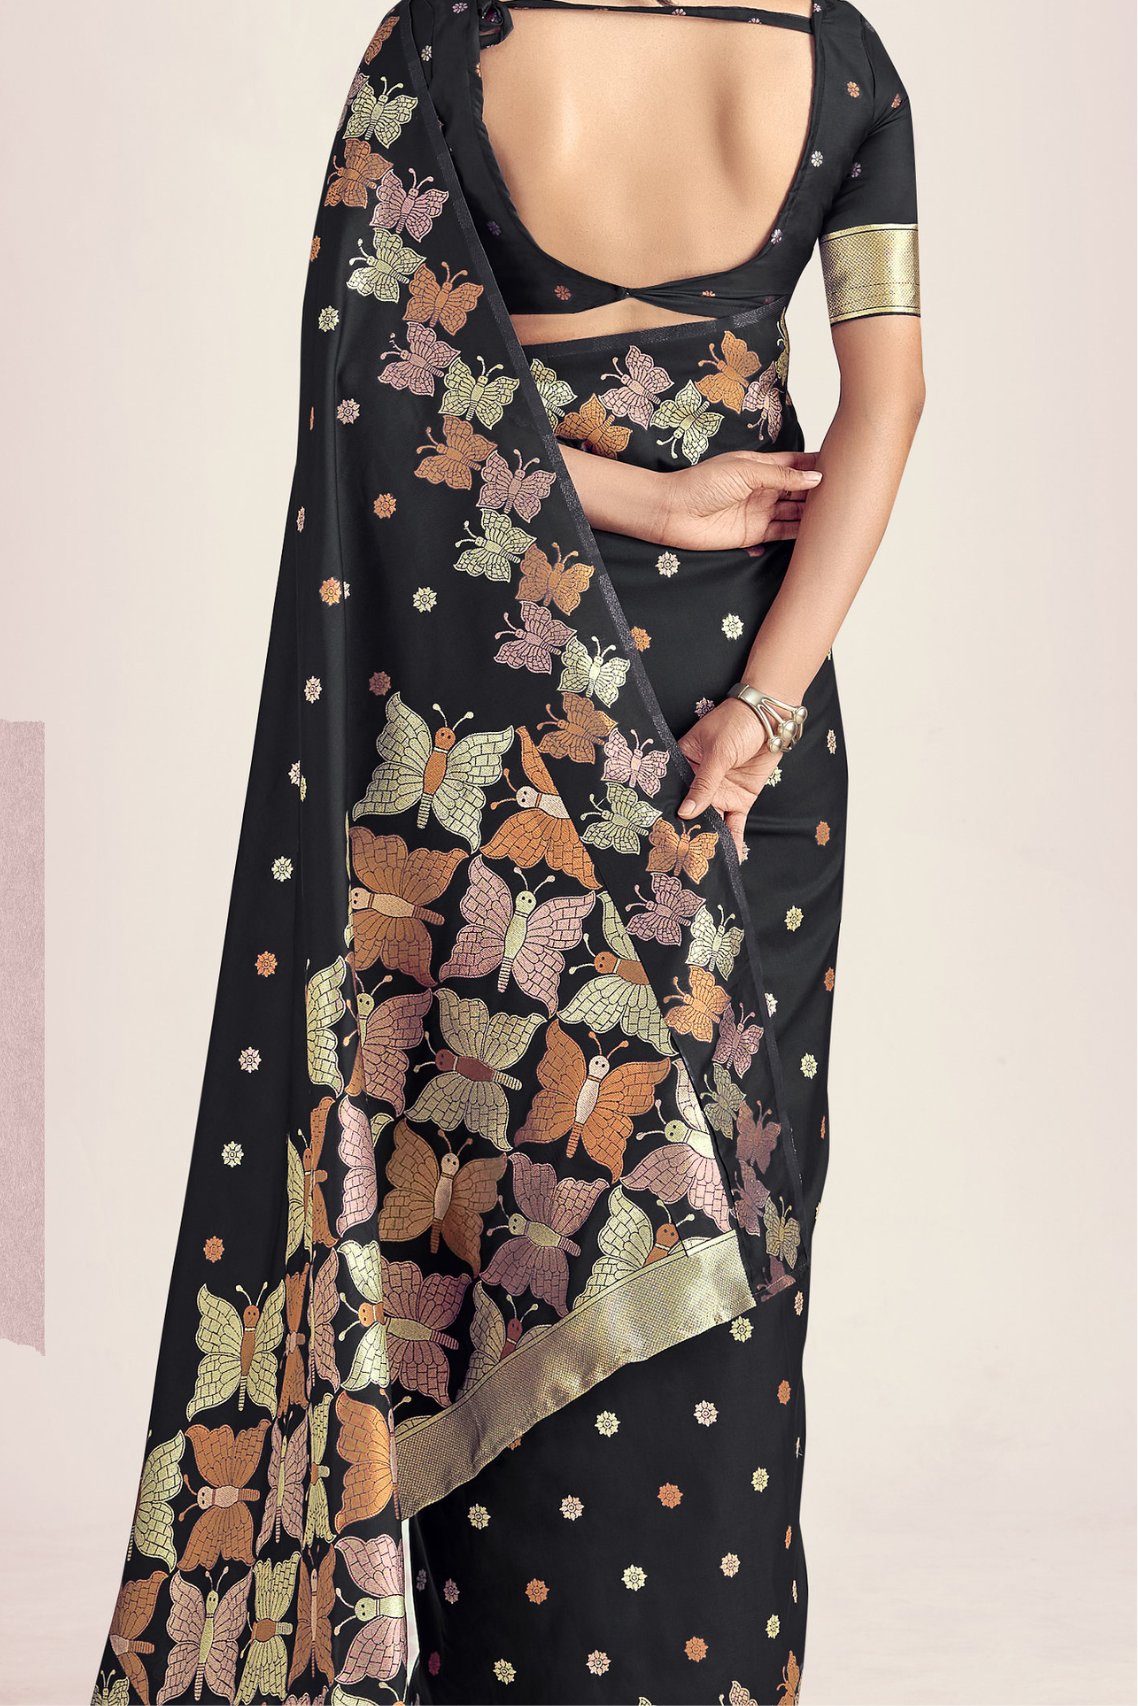 Buy MySilkLove Cinder Black Banarasi Designer Saree Online